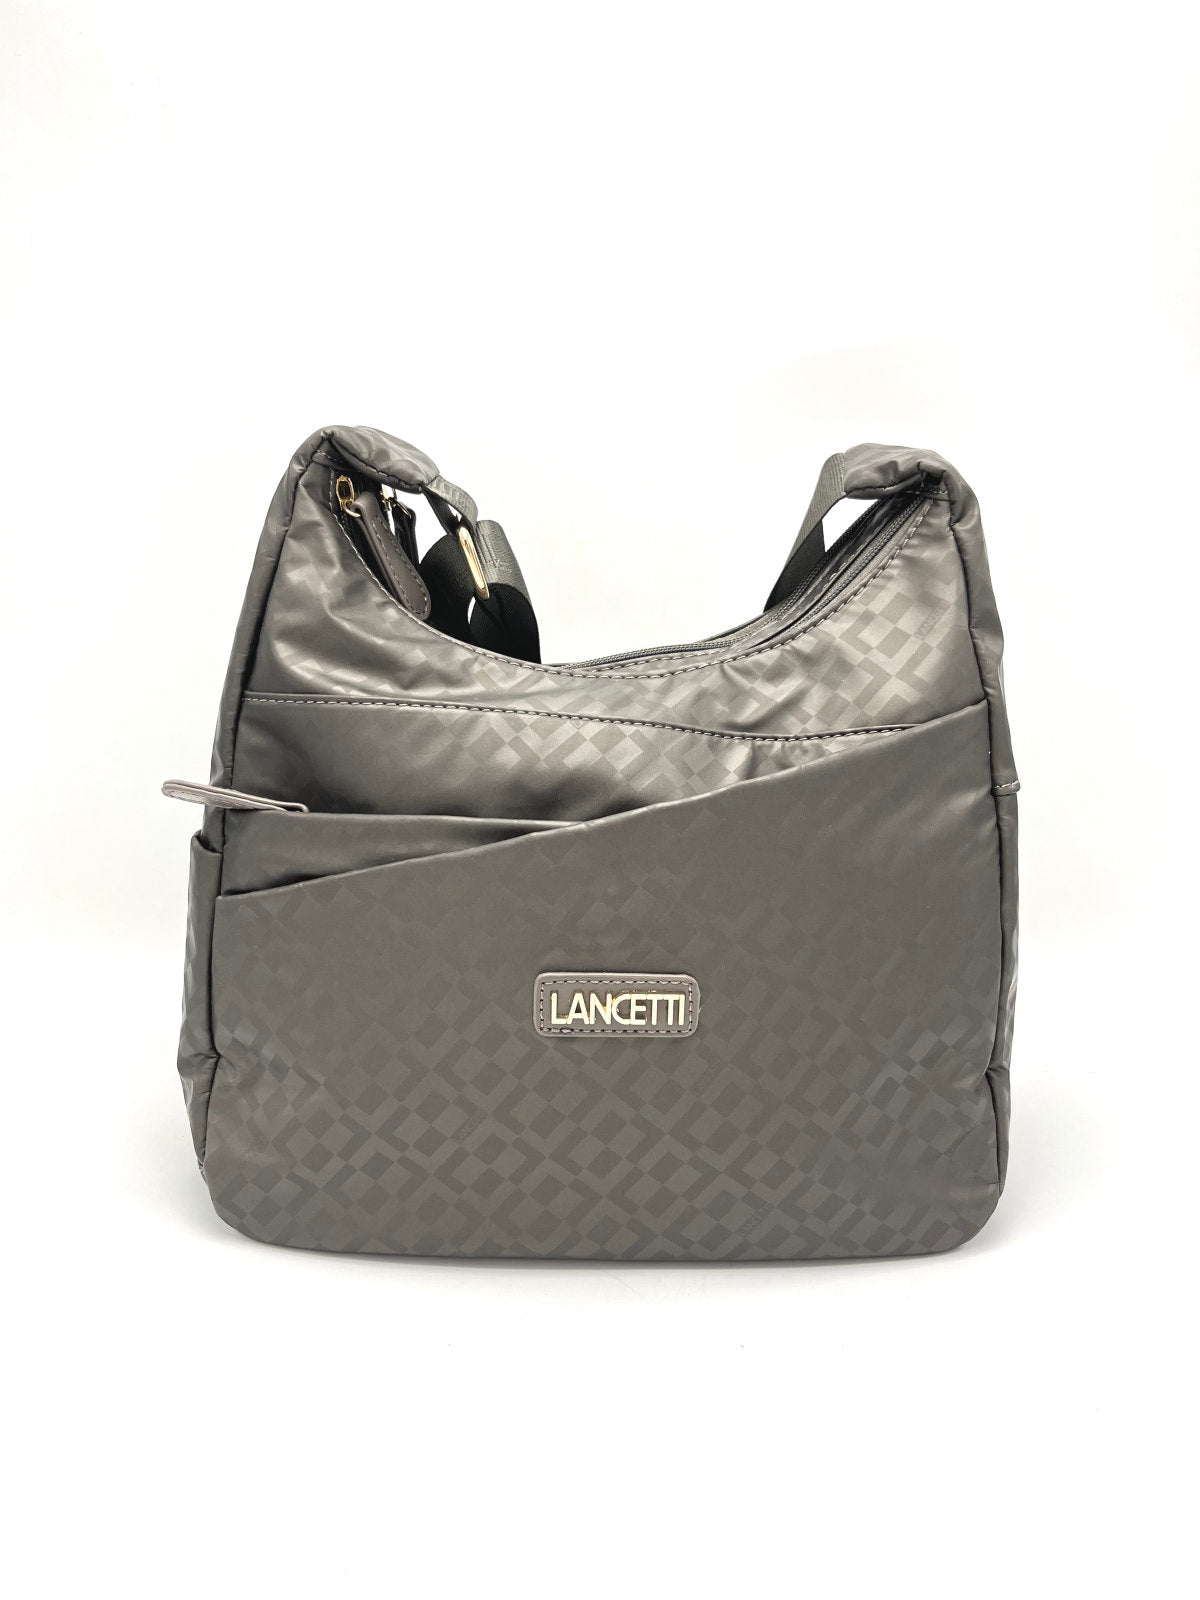 Shoulder bag, brand Lancetti, art. LL100-6.290